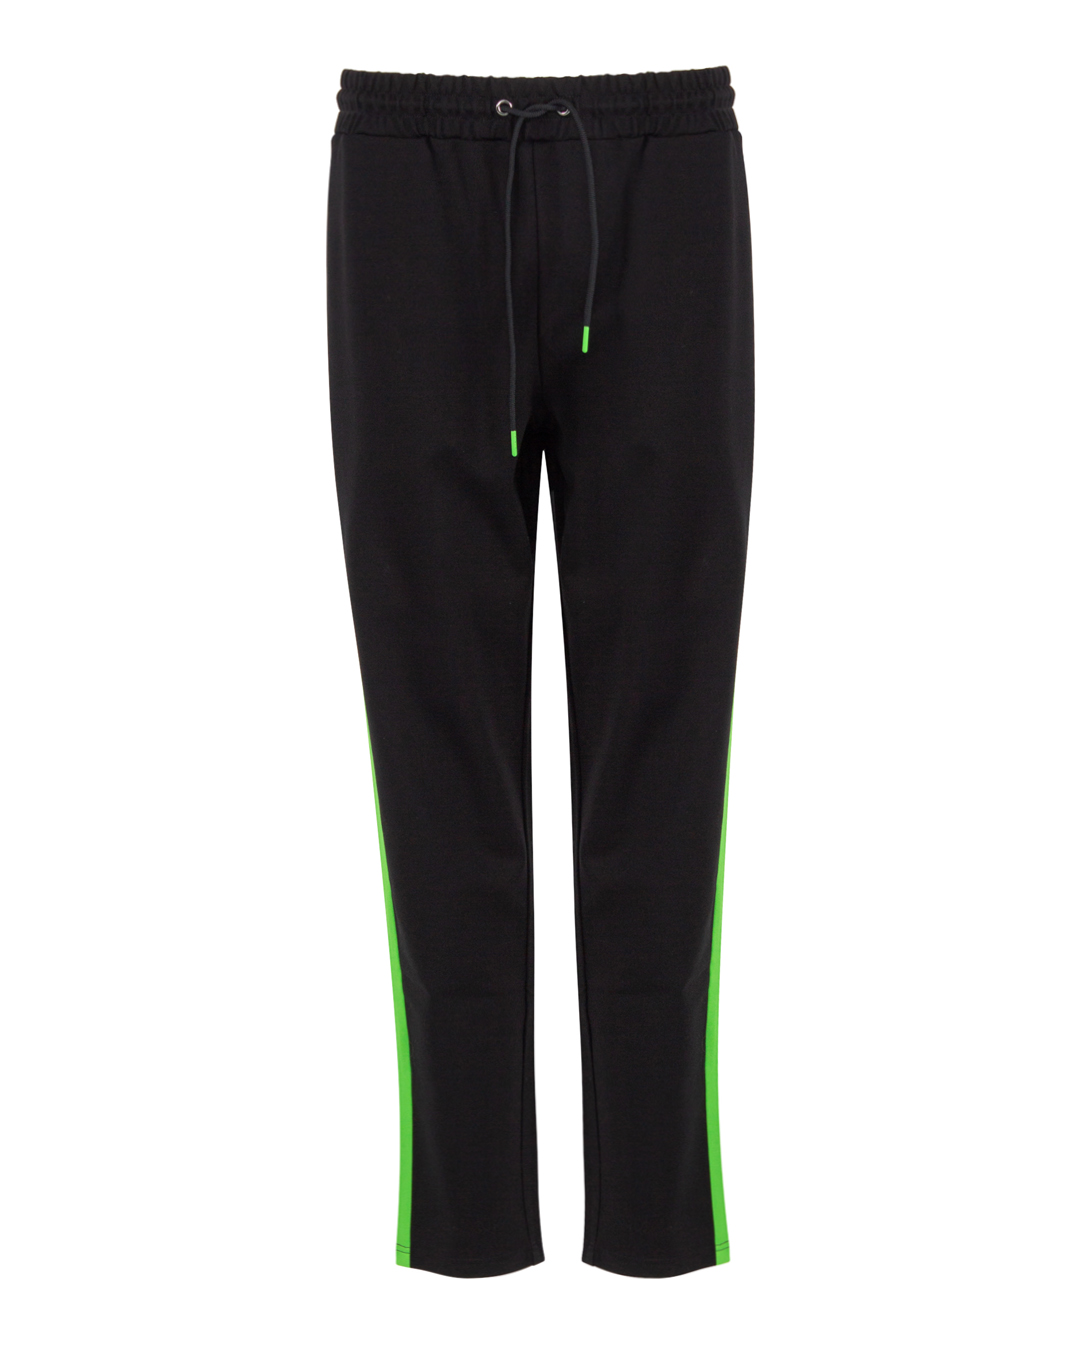 брюки Harmont & Blaine FRK155 черный+зеленый xl, размер xl, цвет черный+зеленый FRK155 черный+зеленый xl - фото 1